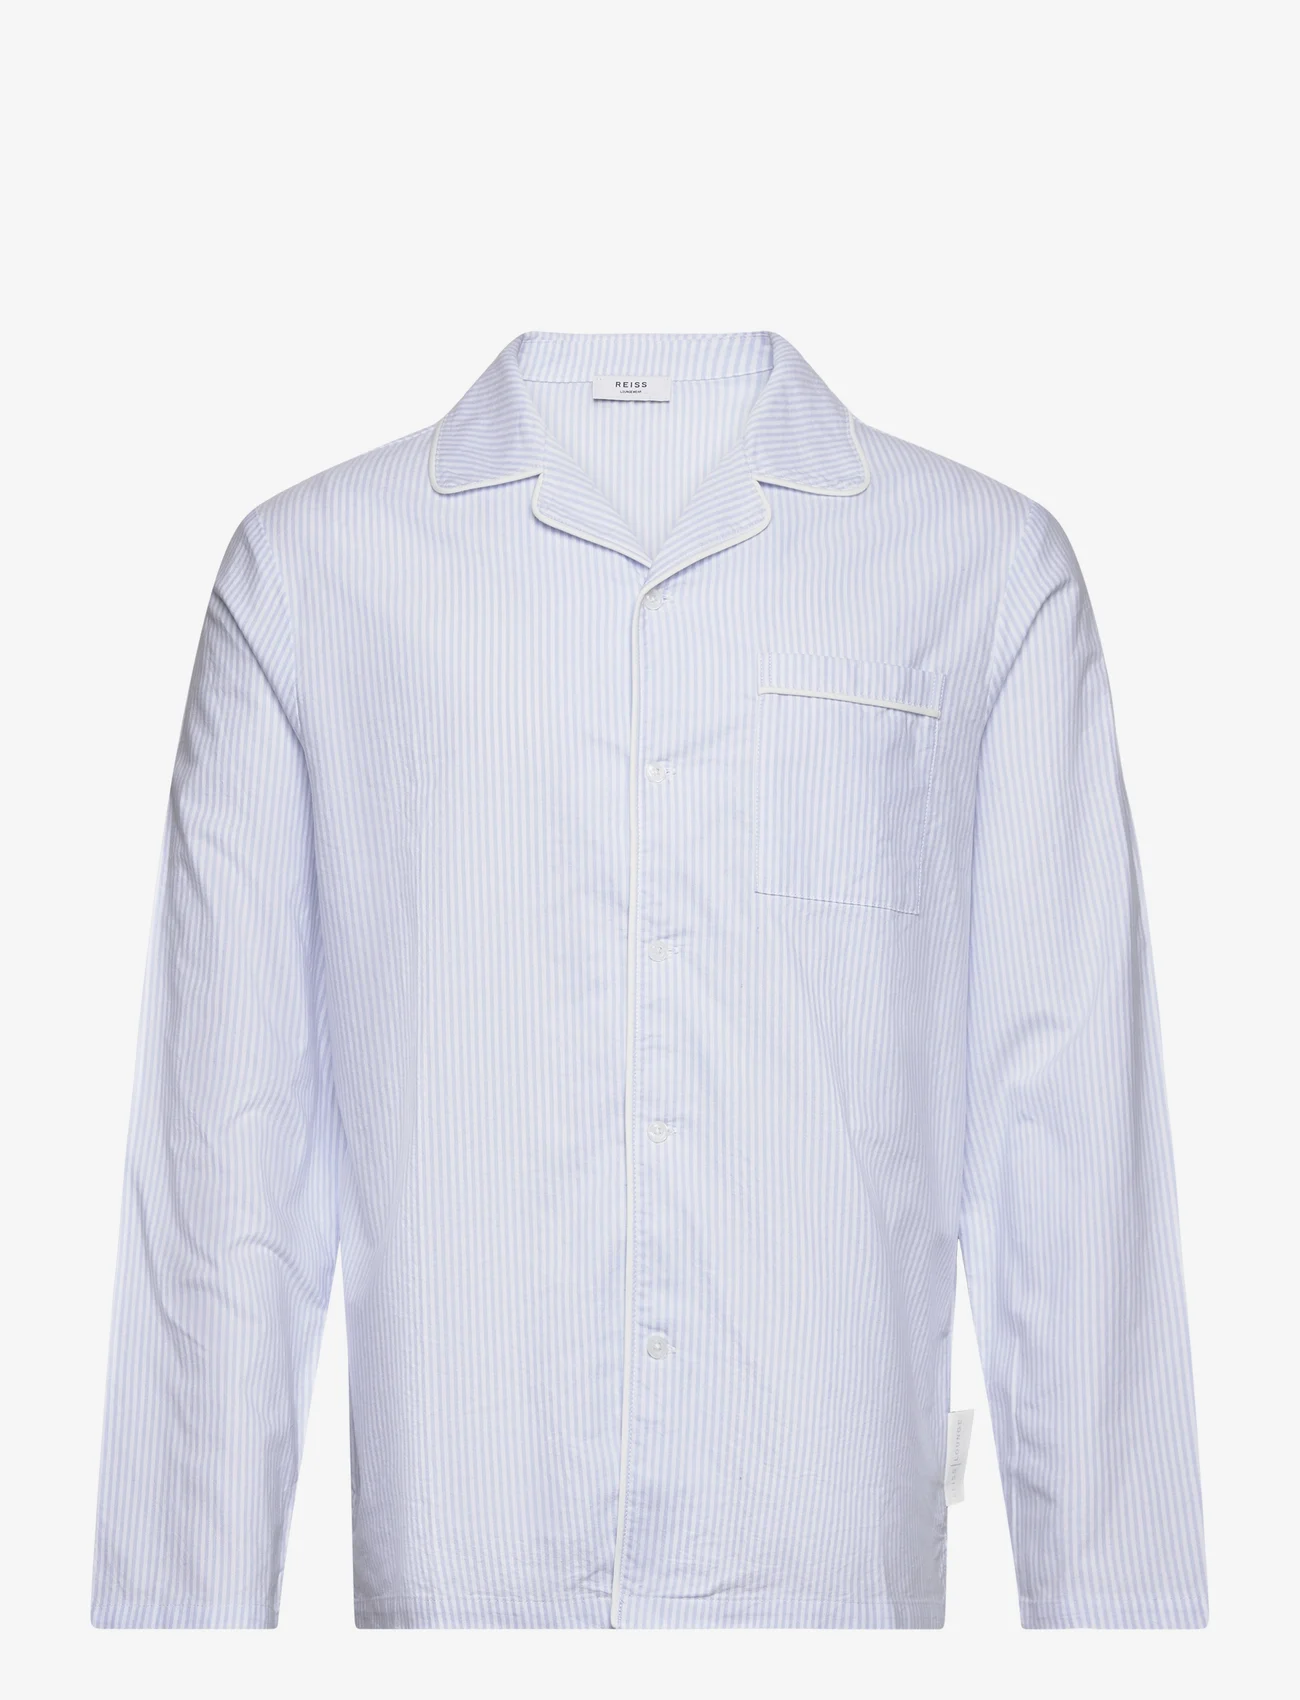 Reiss - WESTLEY Pyjama Shirt - pyjamaoberteil - blue/white - 0